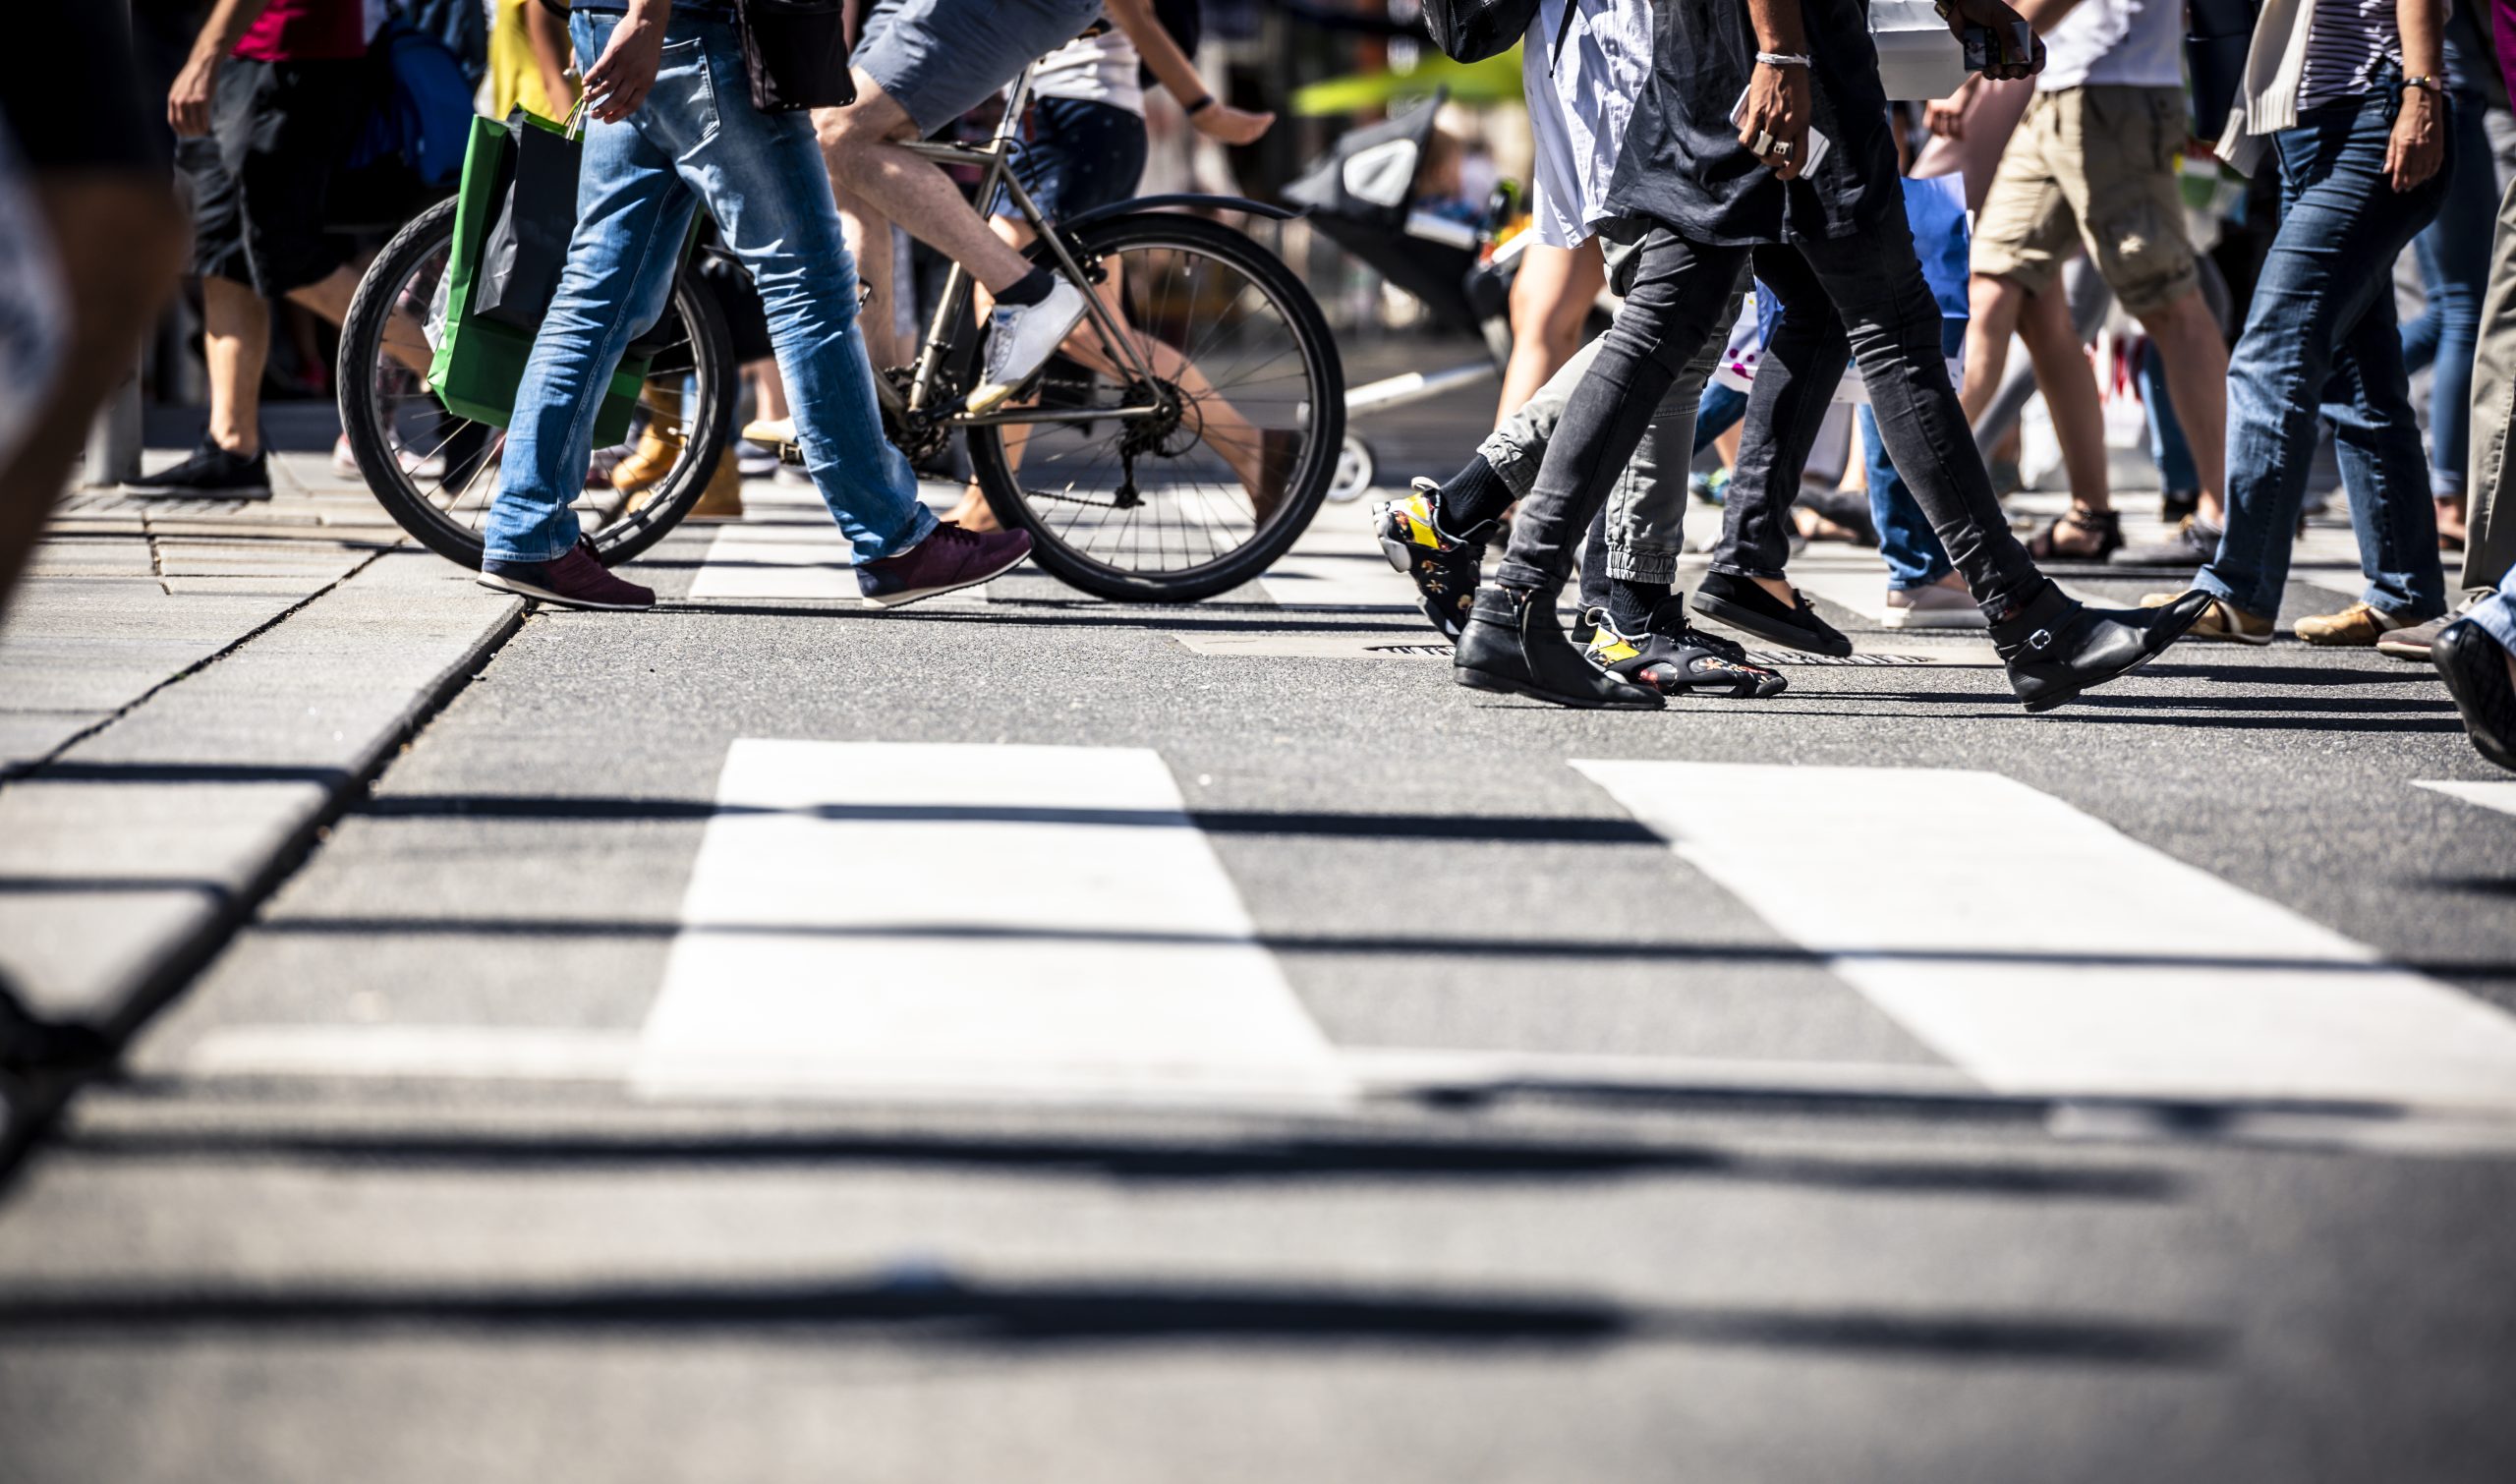 Pedestrians walking and biking at a crosswalk